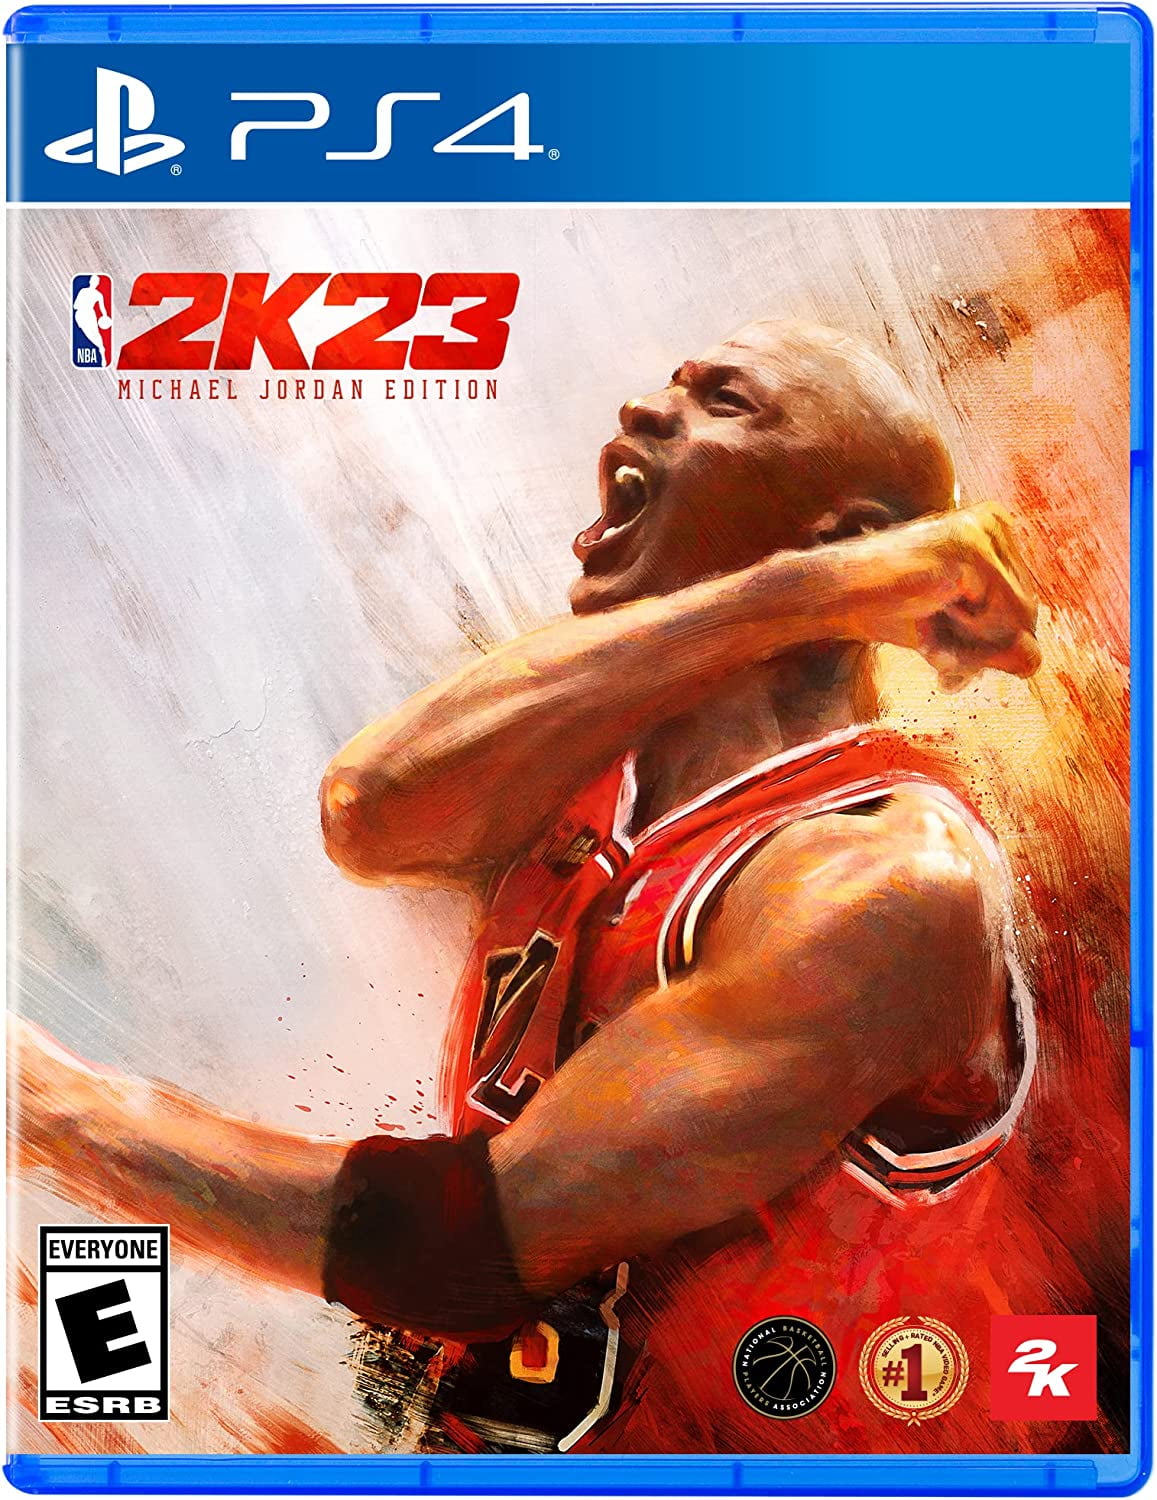  NBA 2K23 (Switch) EU Version Region Free : Video Games